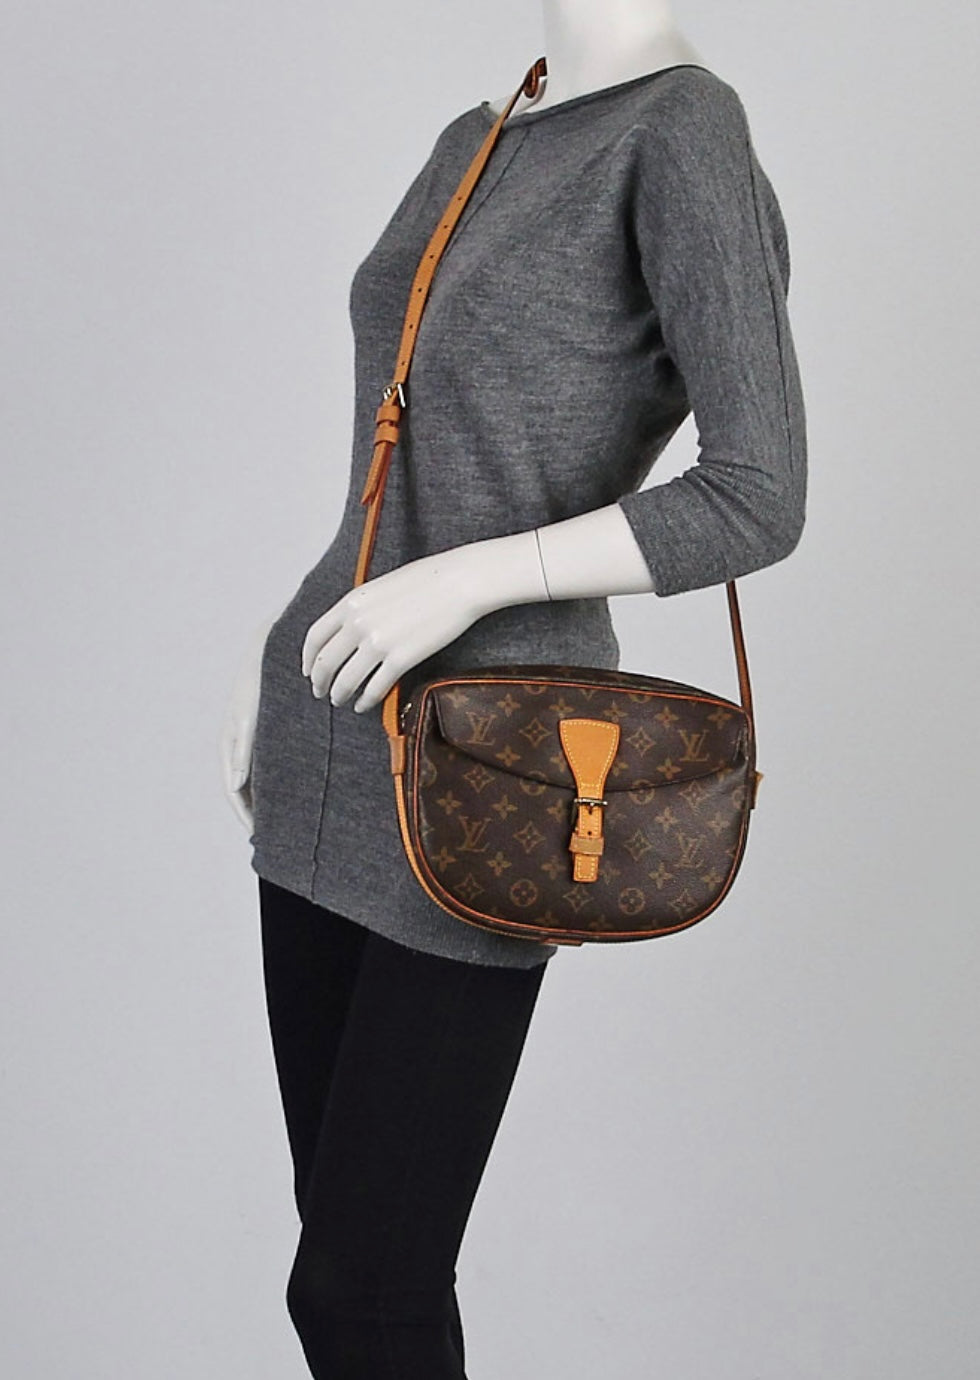 Louis Vuitton Jeune Fille Handbag